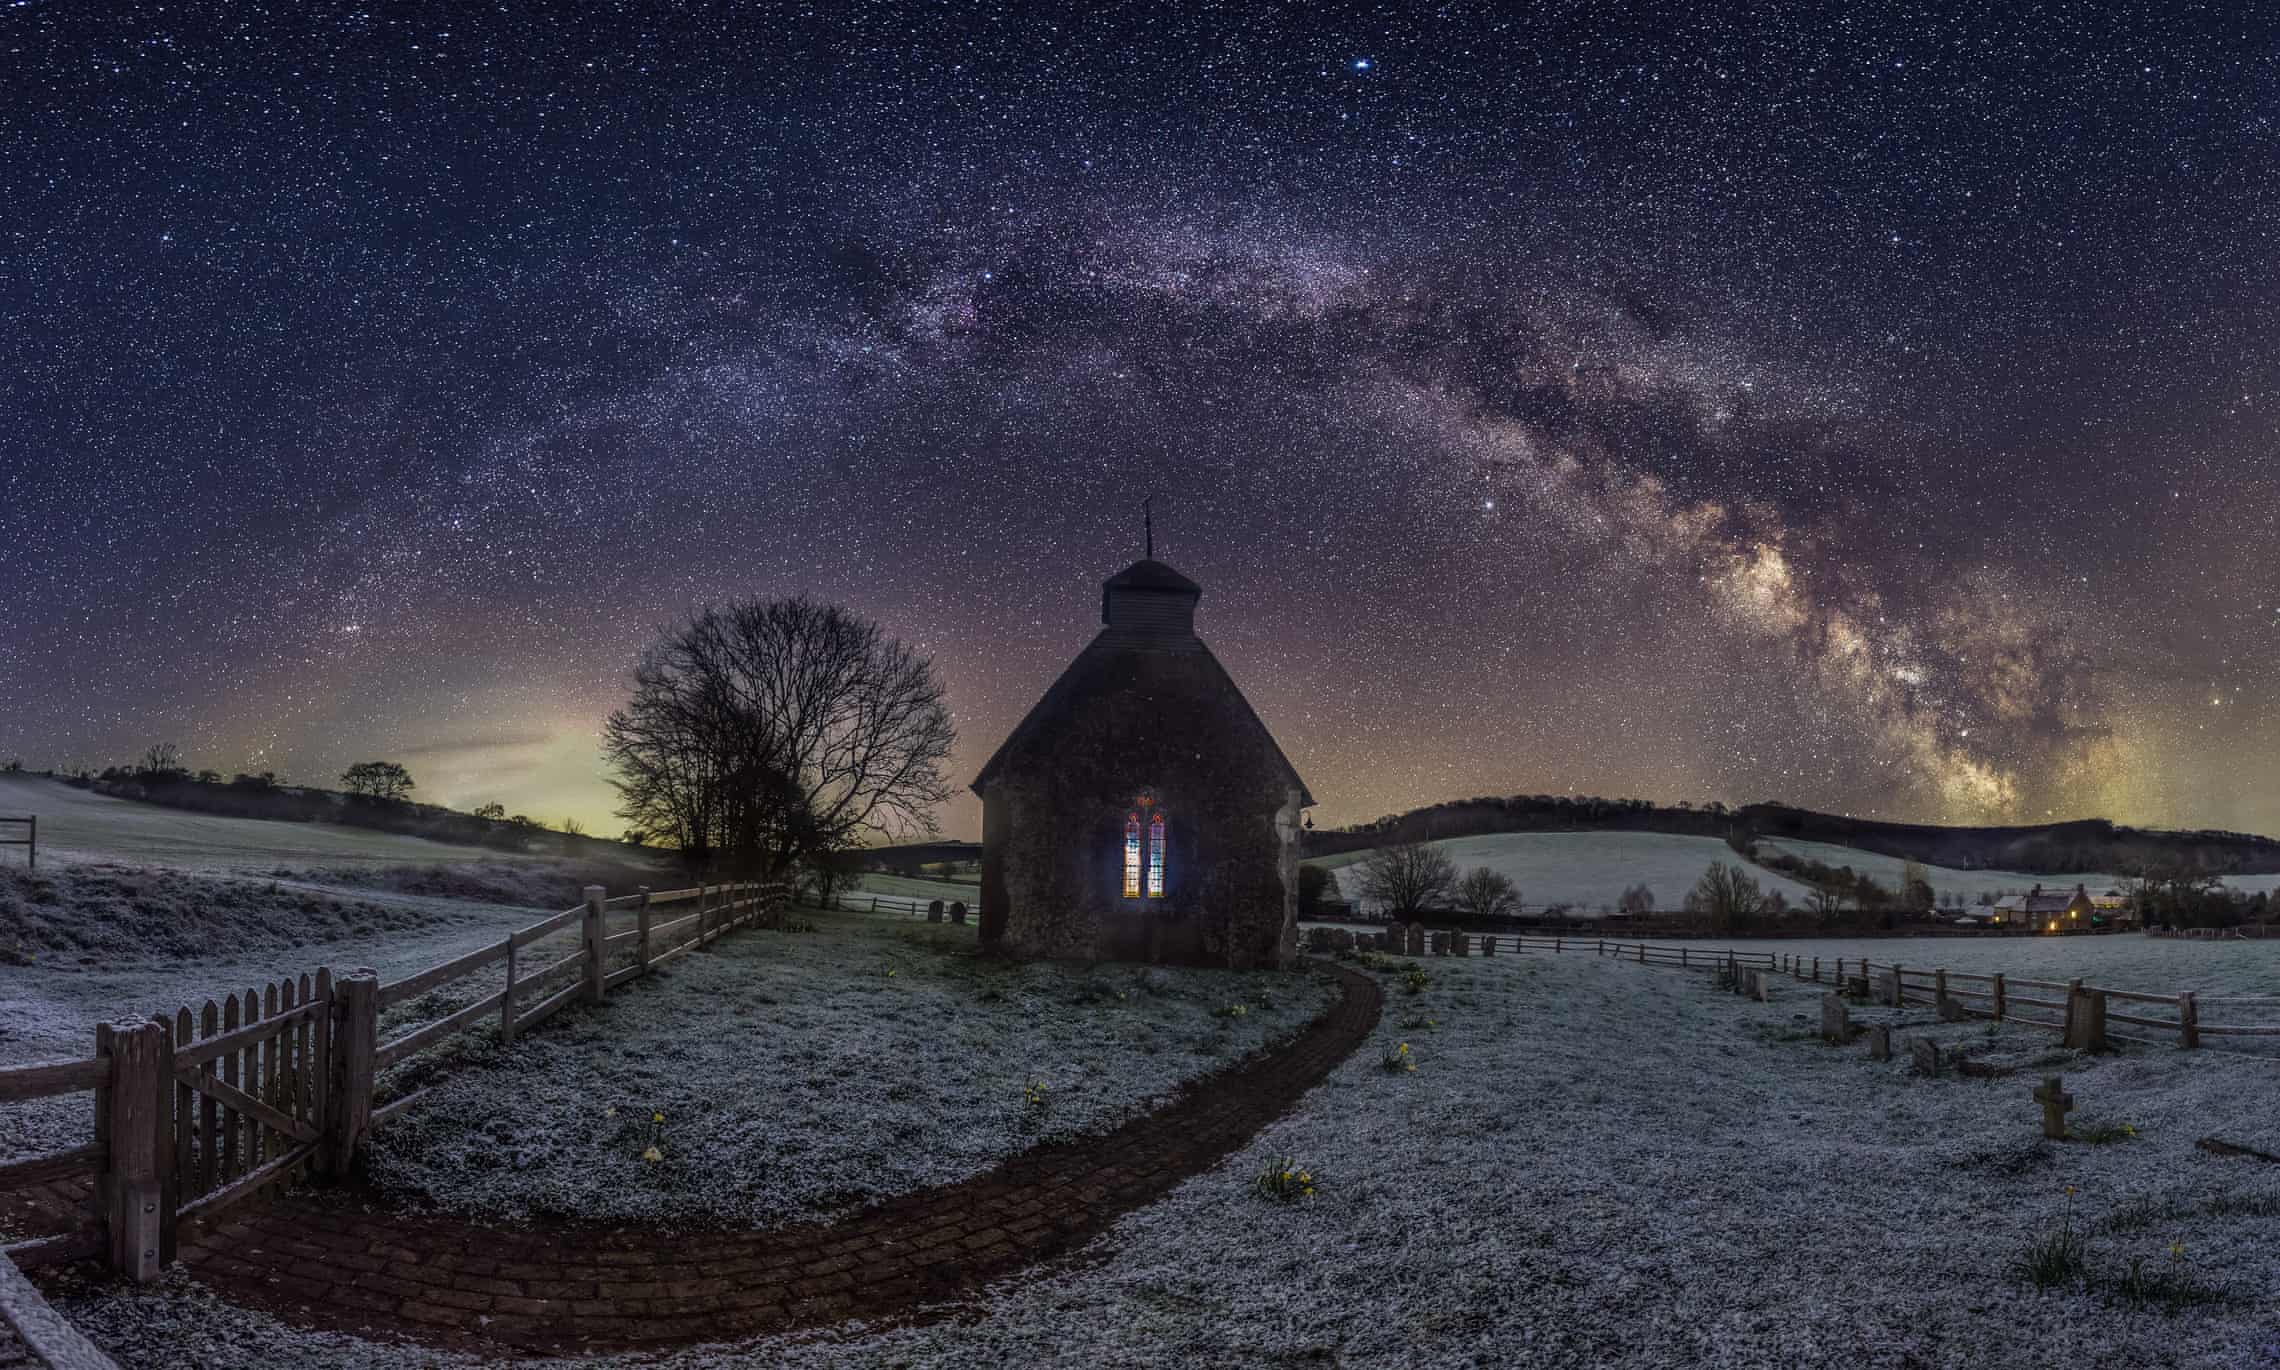 Snowy scene with stained-glass windowed church below the Milky Way galaxy